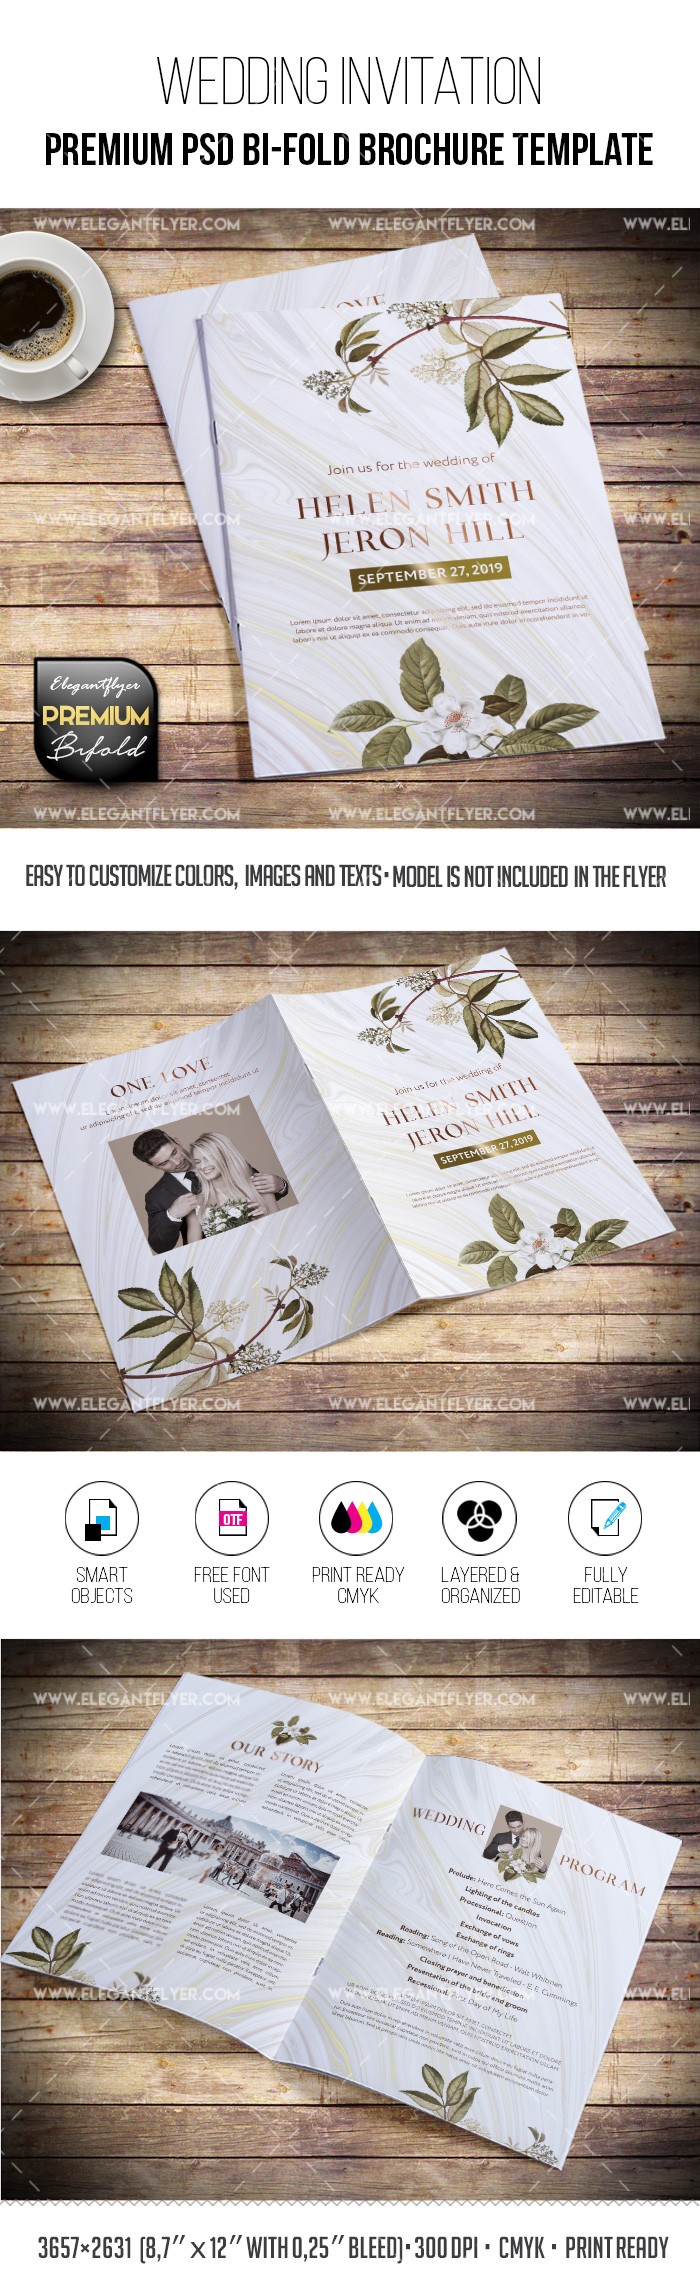 My Wedding – PSD Bi-Fold Brochure Template by ElegantFlyer